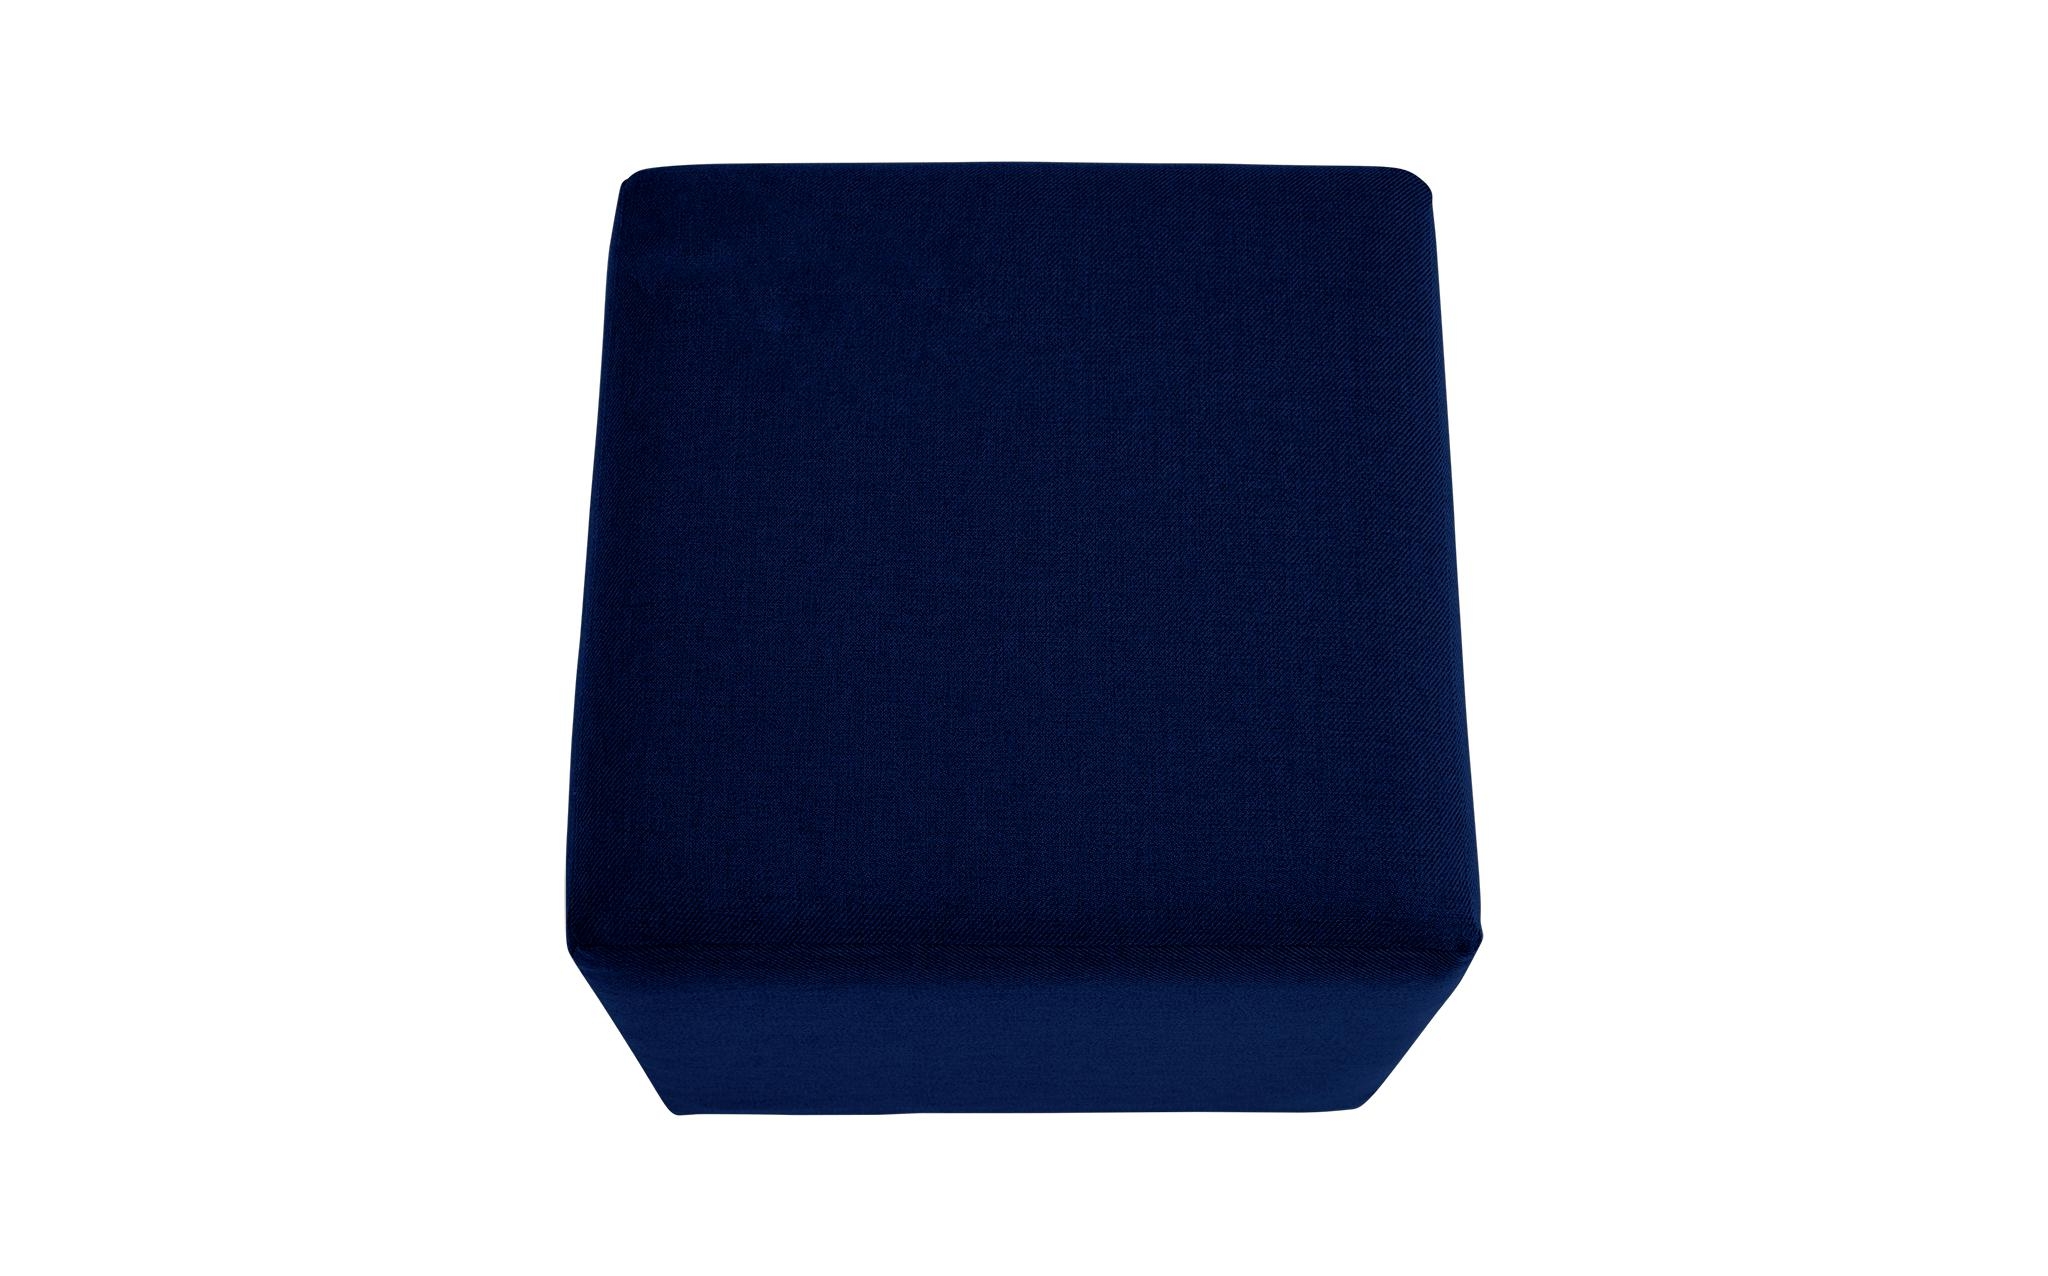 Blue Cort Mid Century Modern Cube Ottoman - Royale Cobalt - Mocha - 20 x 20 - Image 2